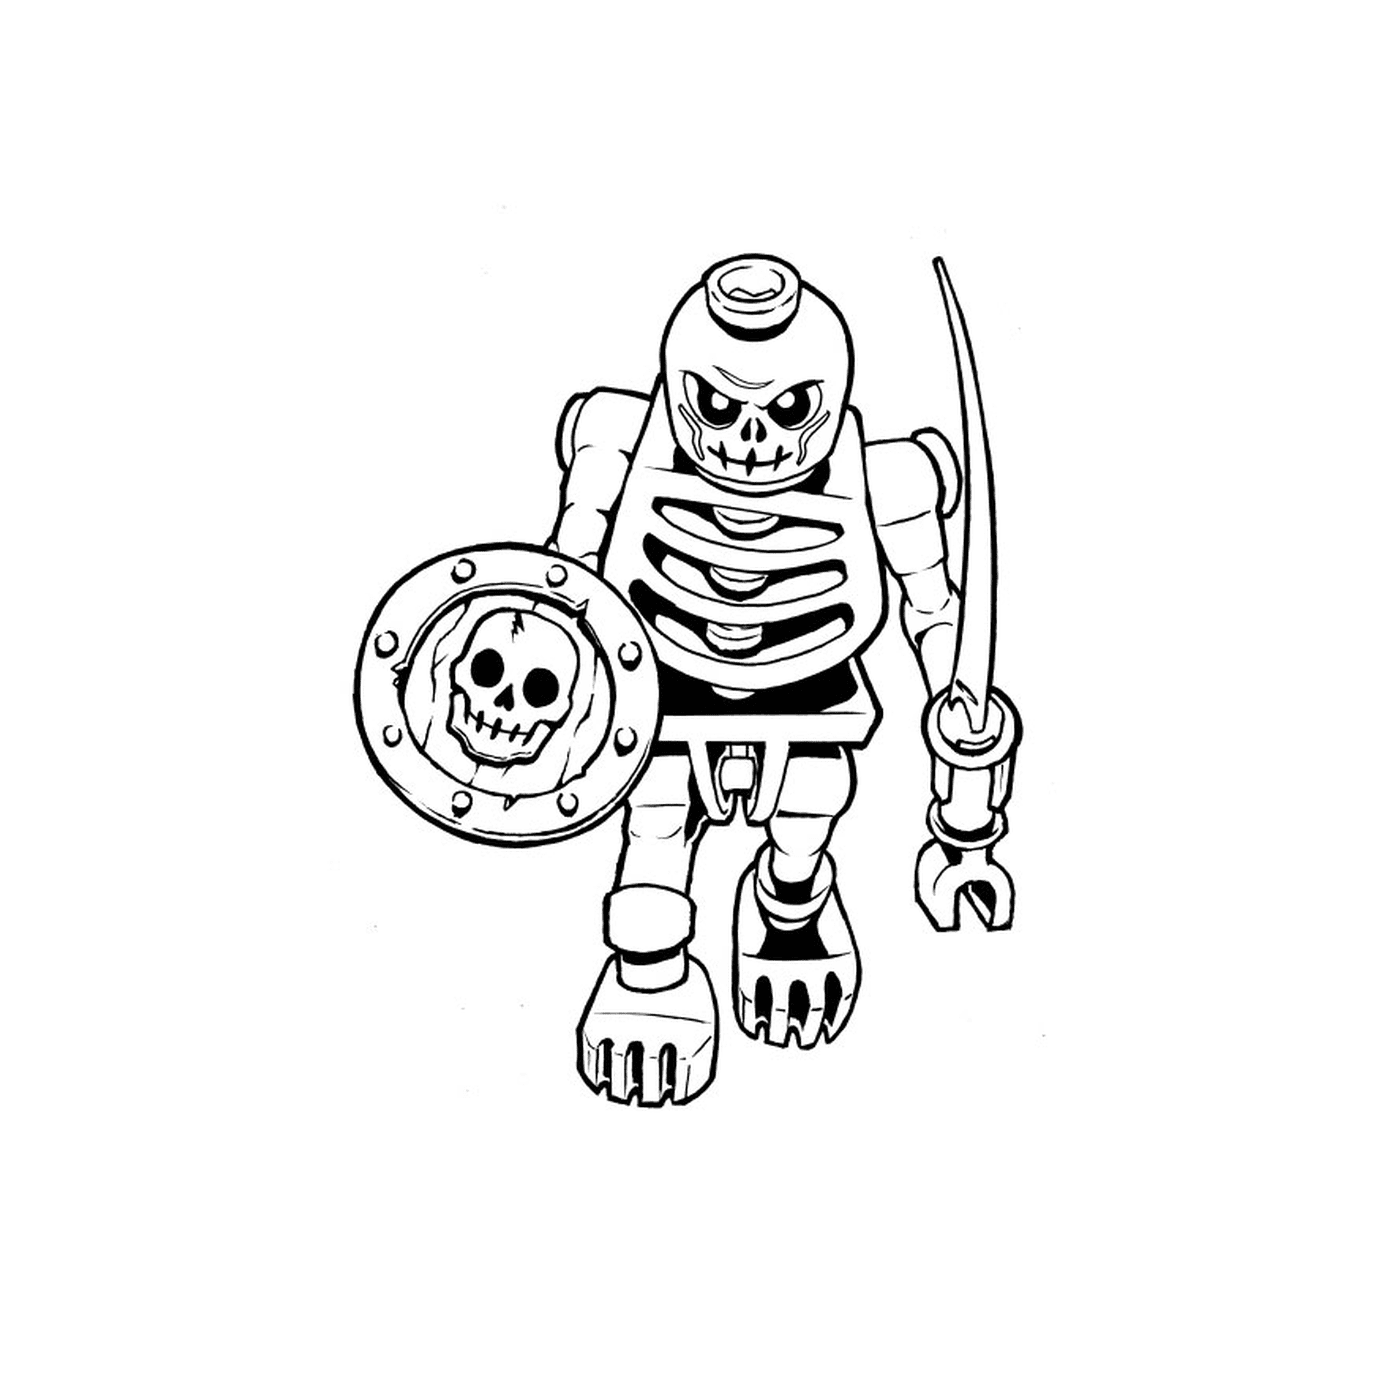  Esqueleto sosteniendo una espada Lego 